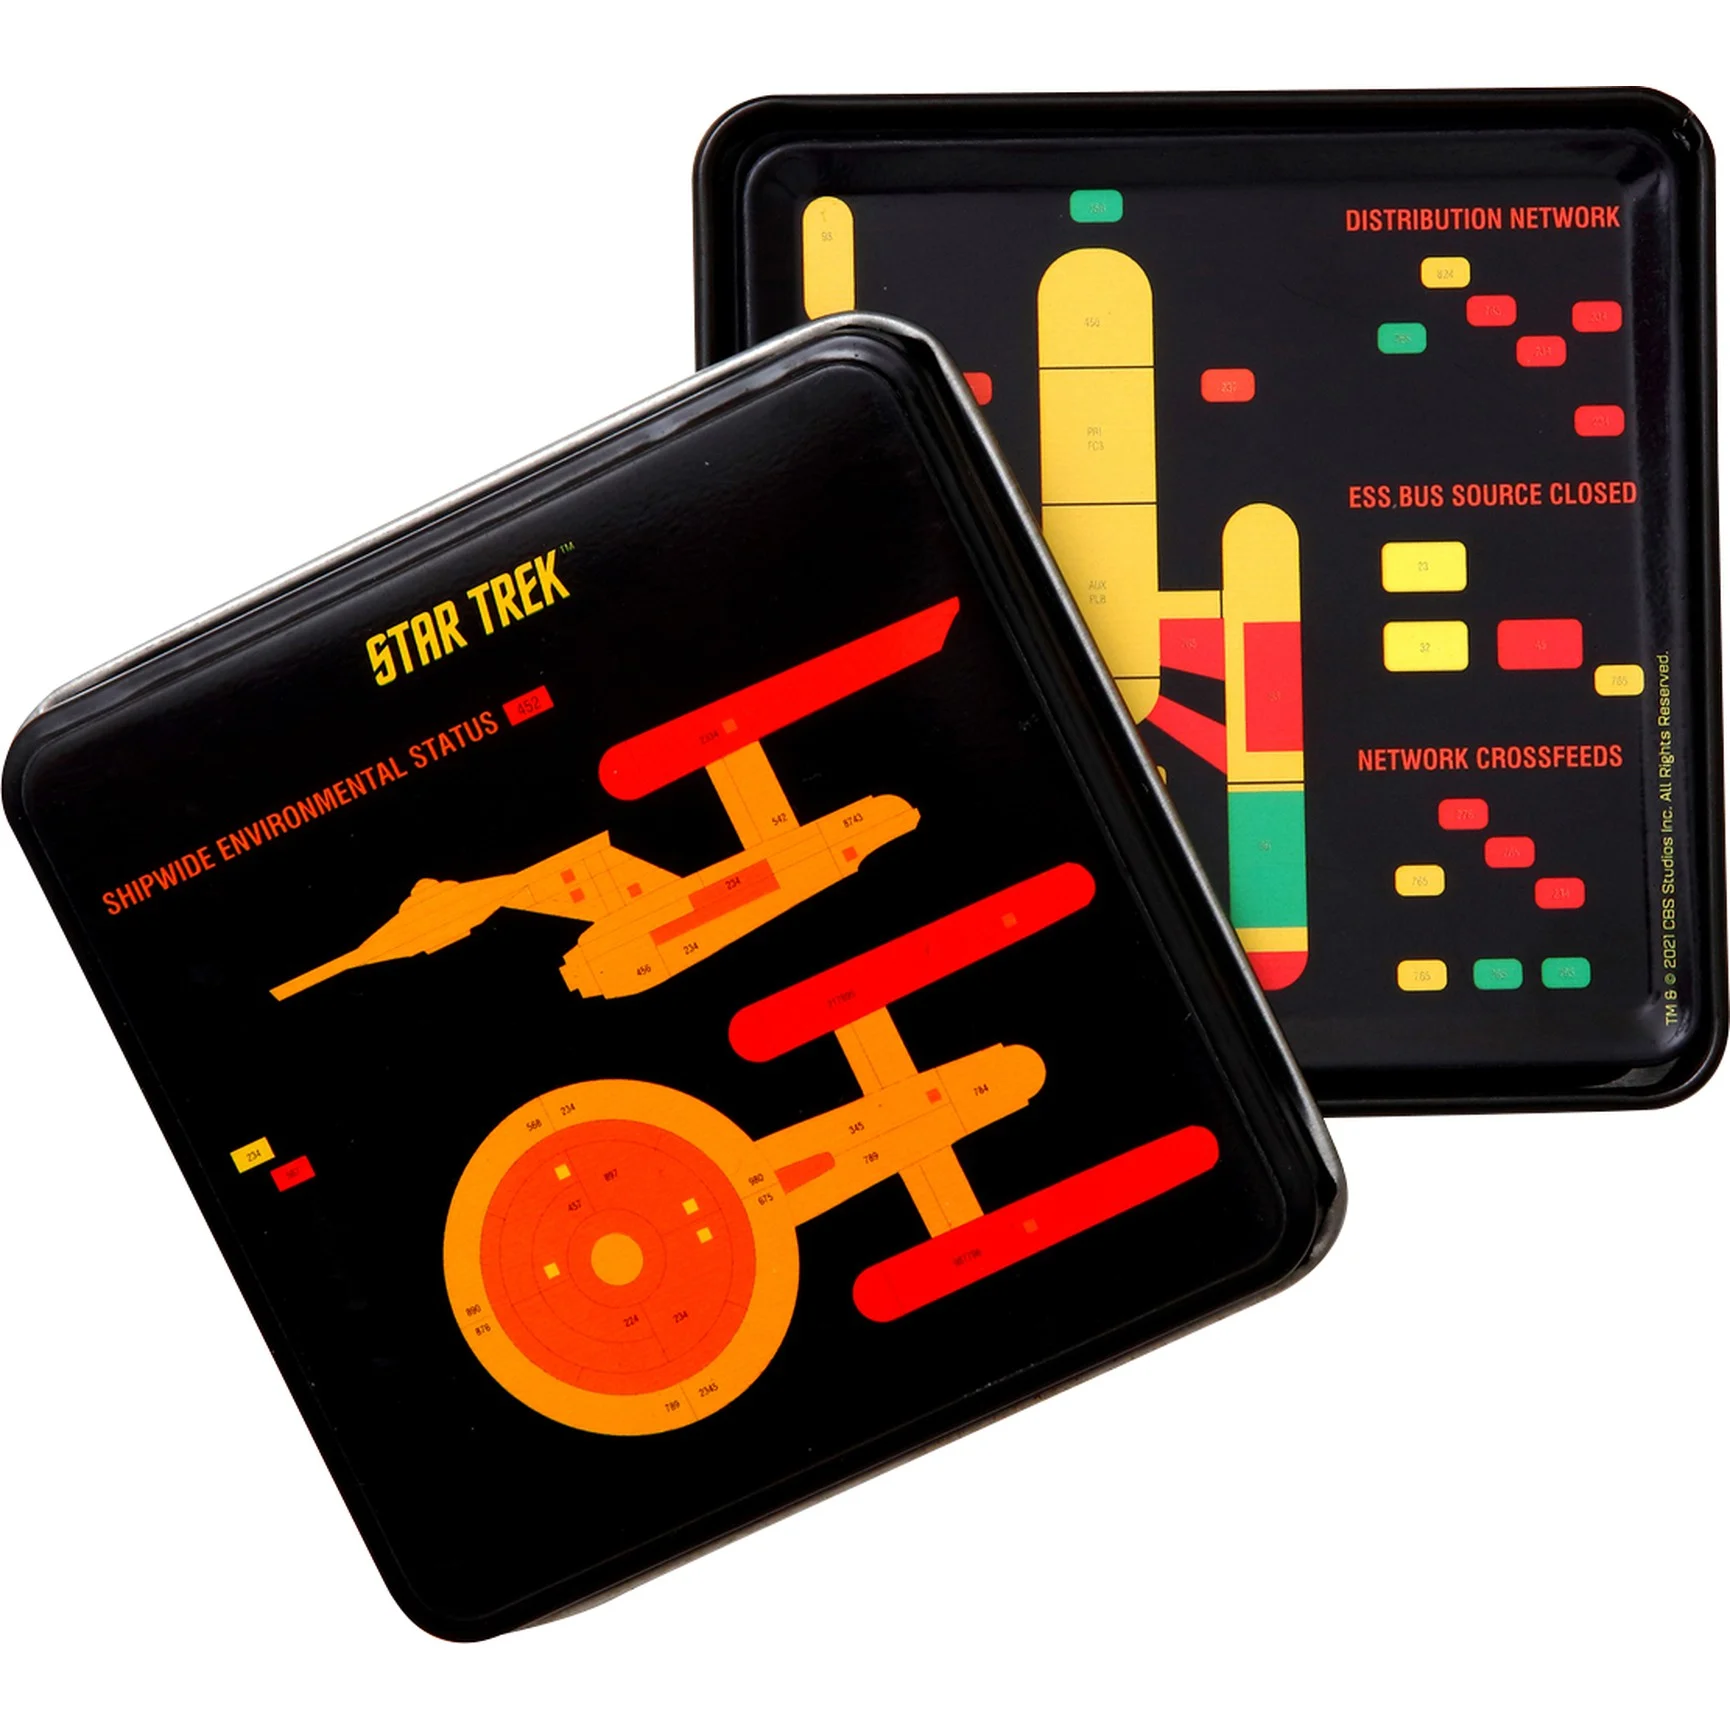 2021 Star Trek Cube Advent Calendar Available Now For Preorder